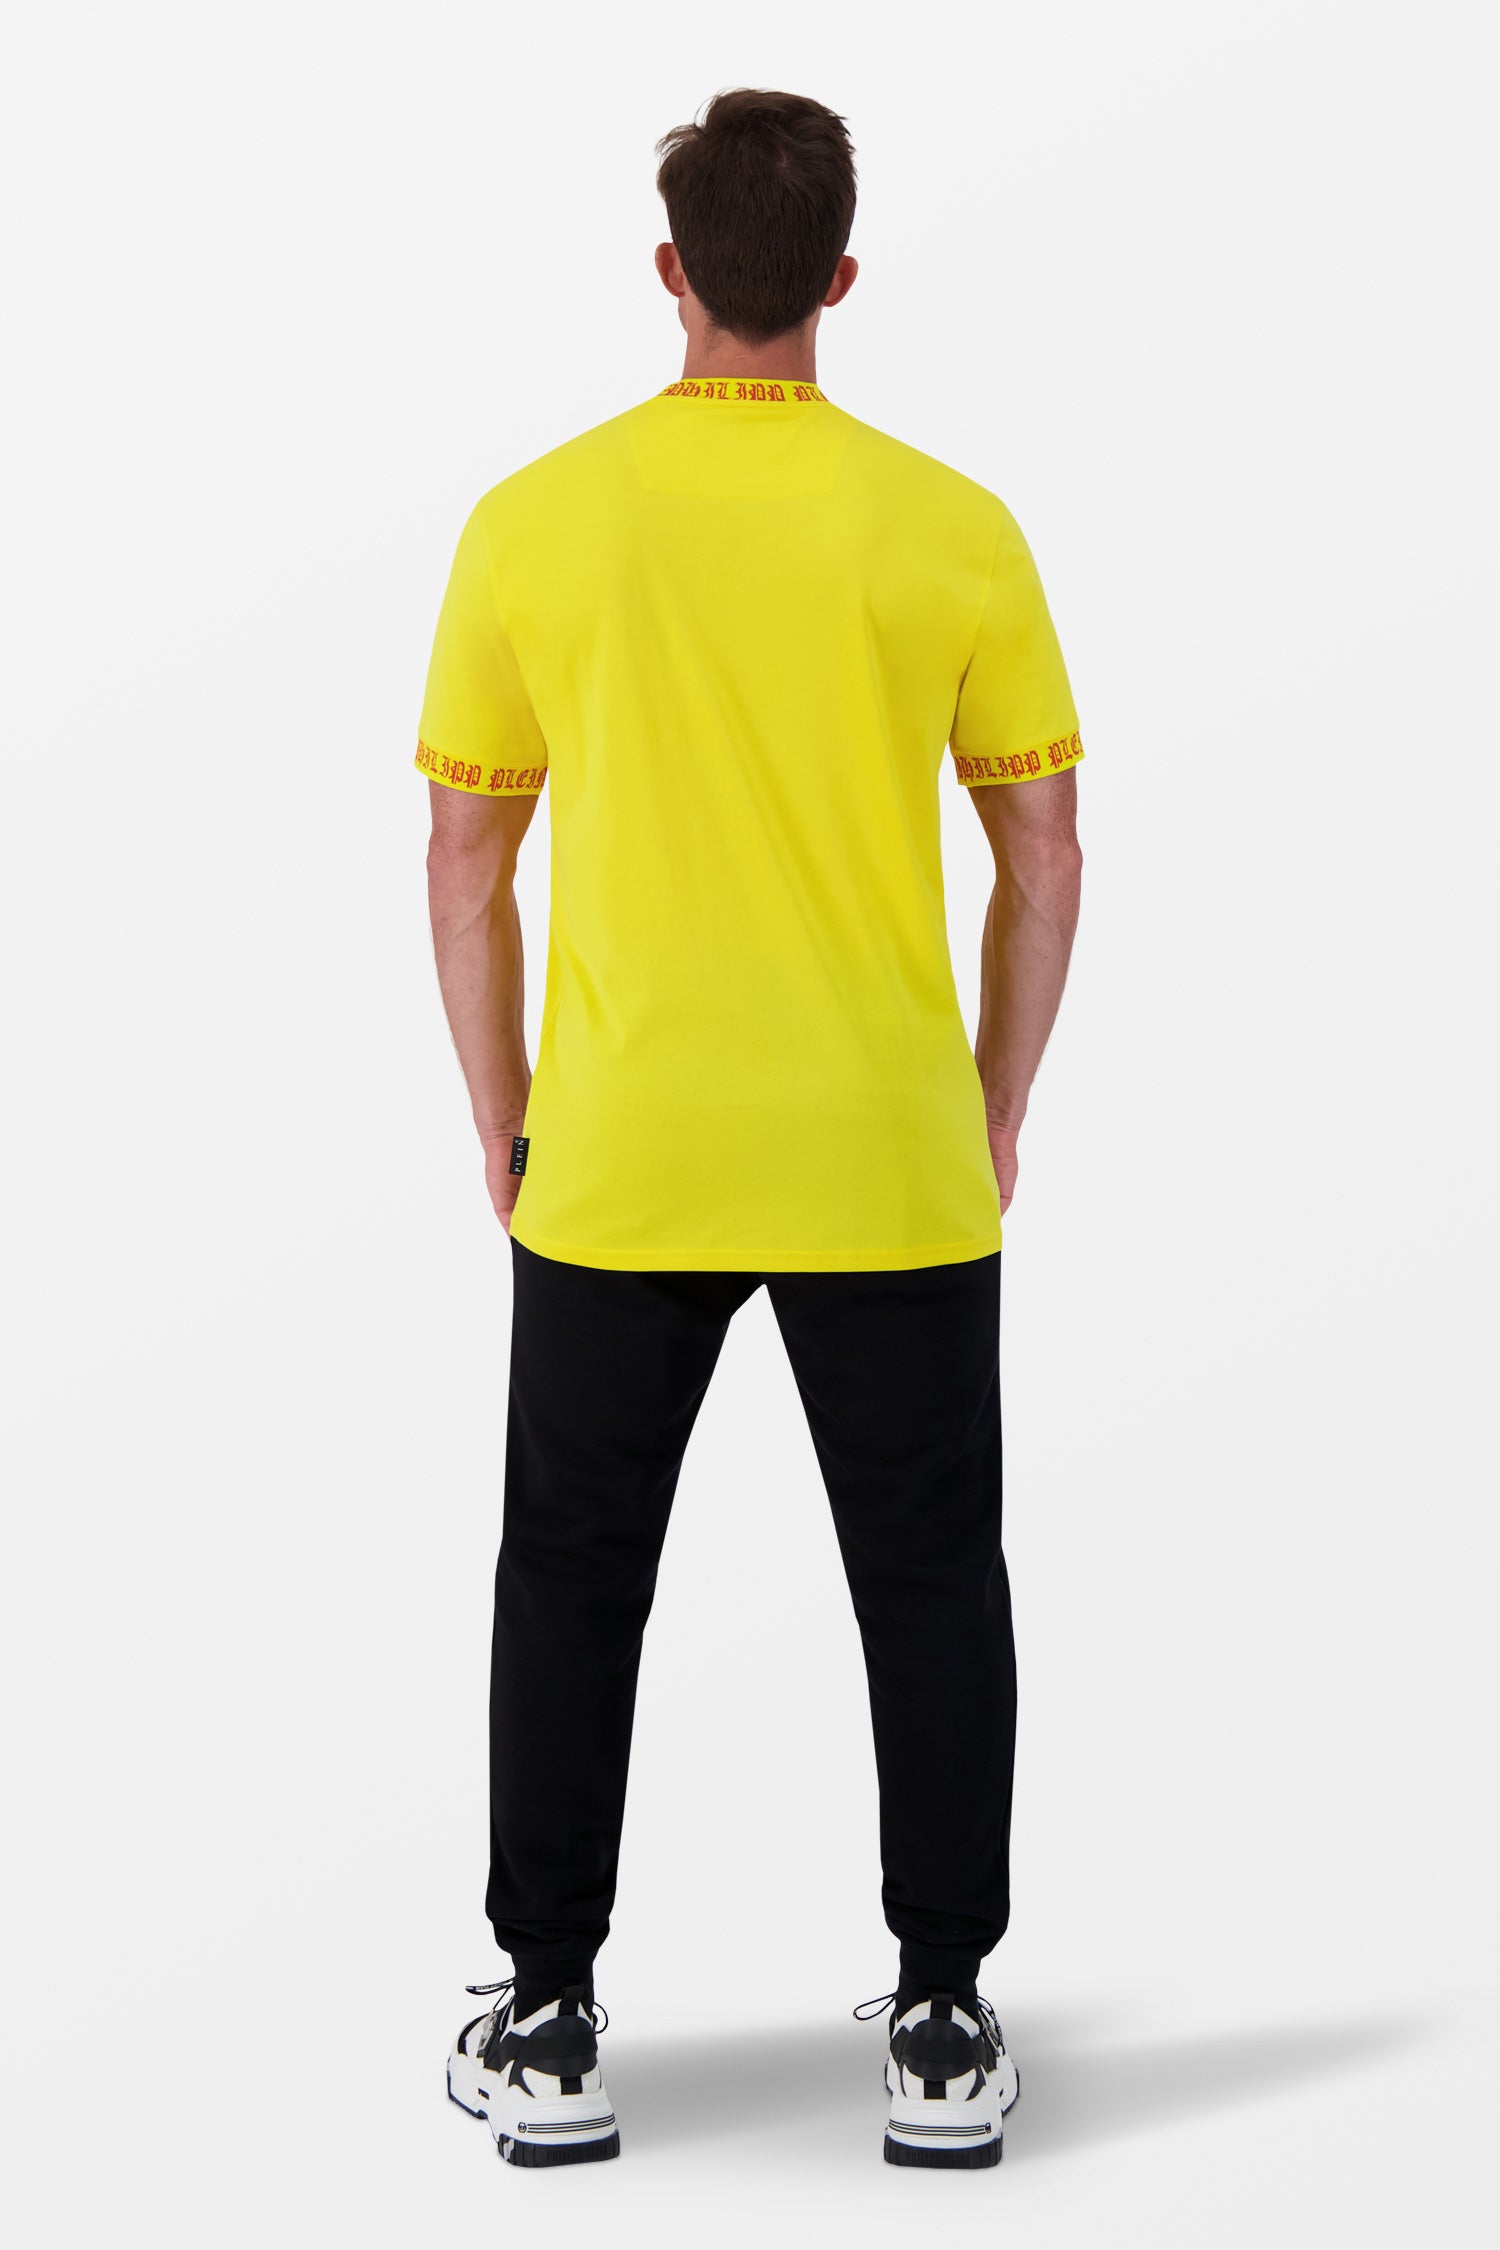 Philipp Plein Yellow Round Neck T-Shirt